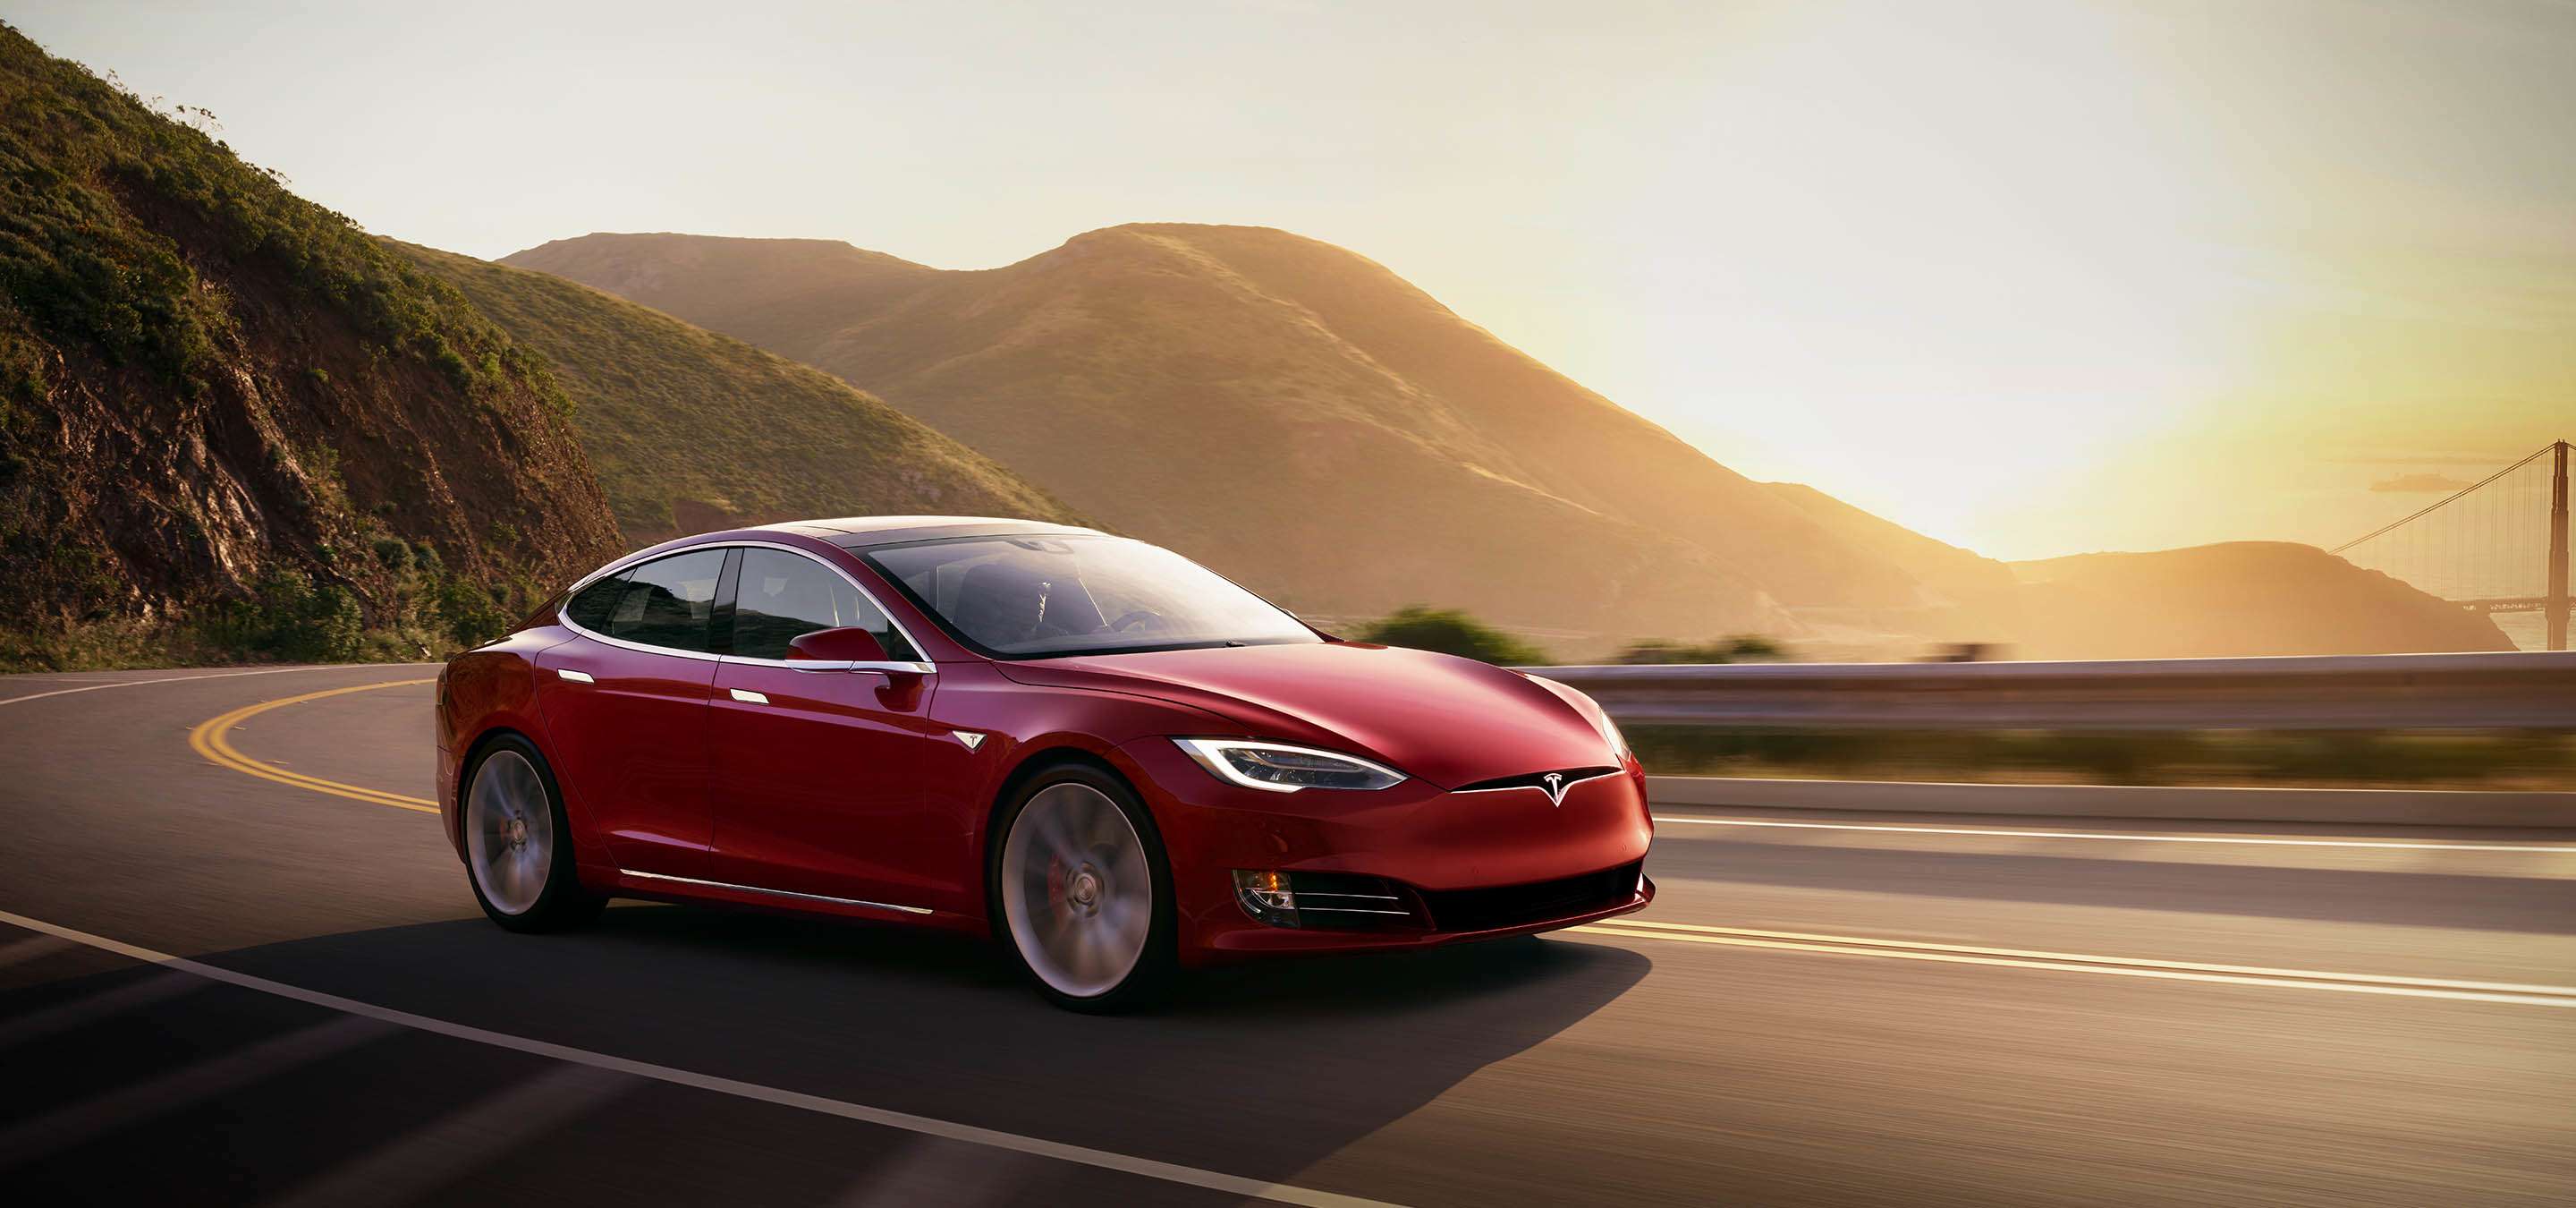 2018 Tesla Model S pictures, specs and price | CarsXA